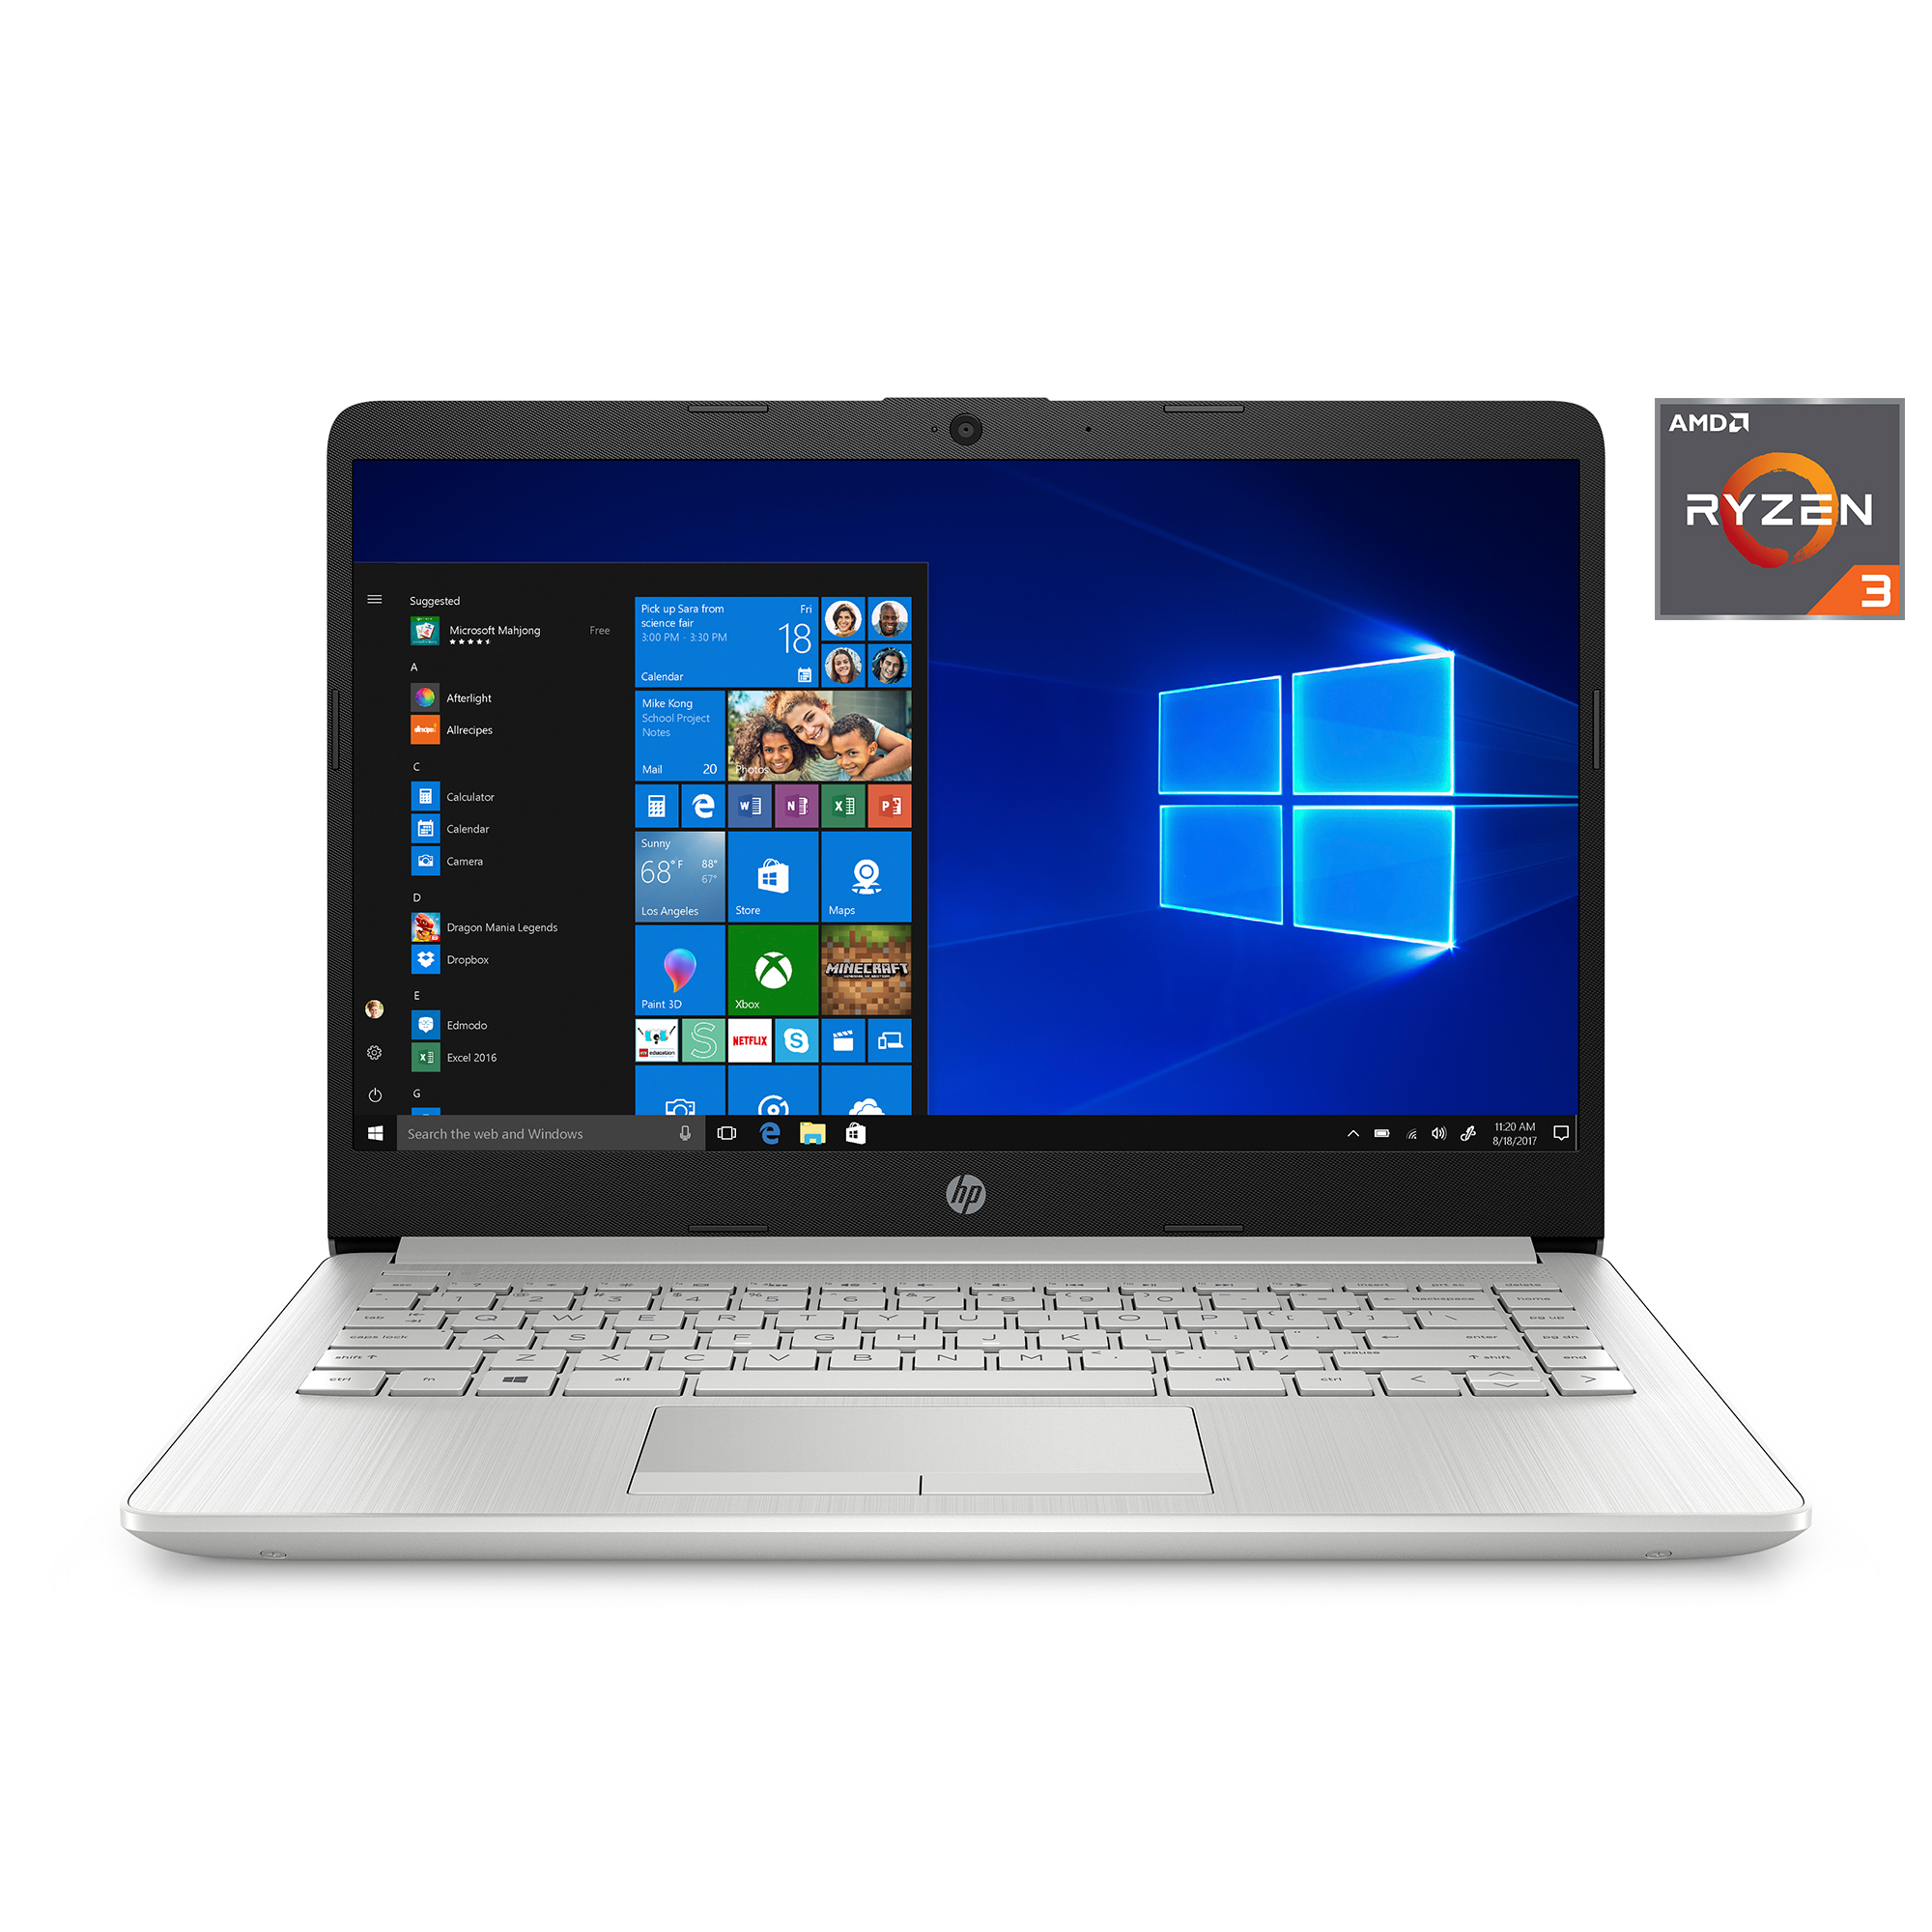 HP VIPRB-14-DK1022WM 14″ Laptop, AMD Ryzen 3, 4GB RAM, 128GB SSD